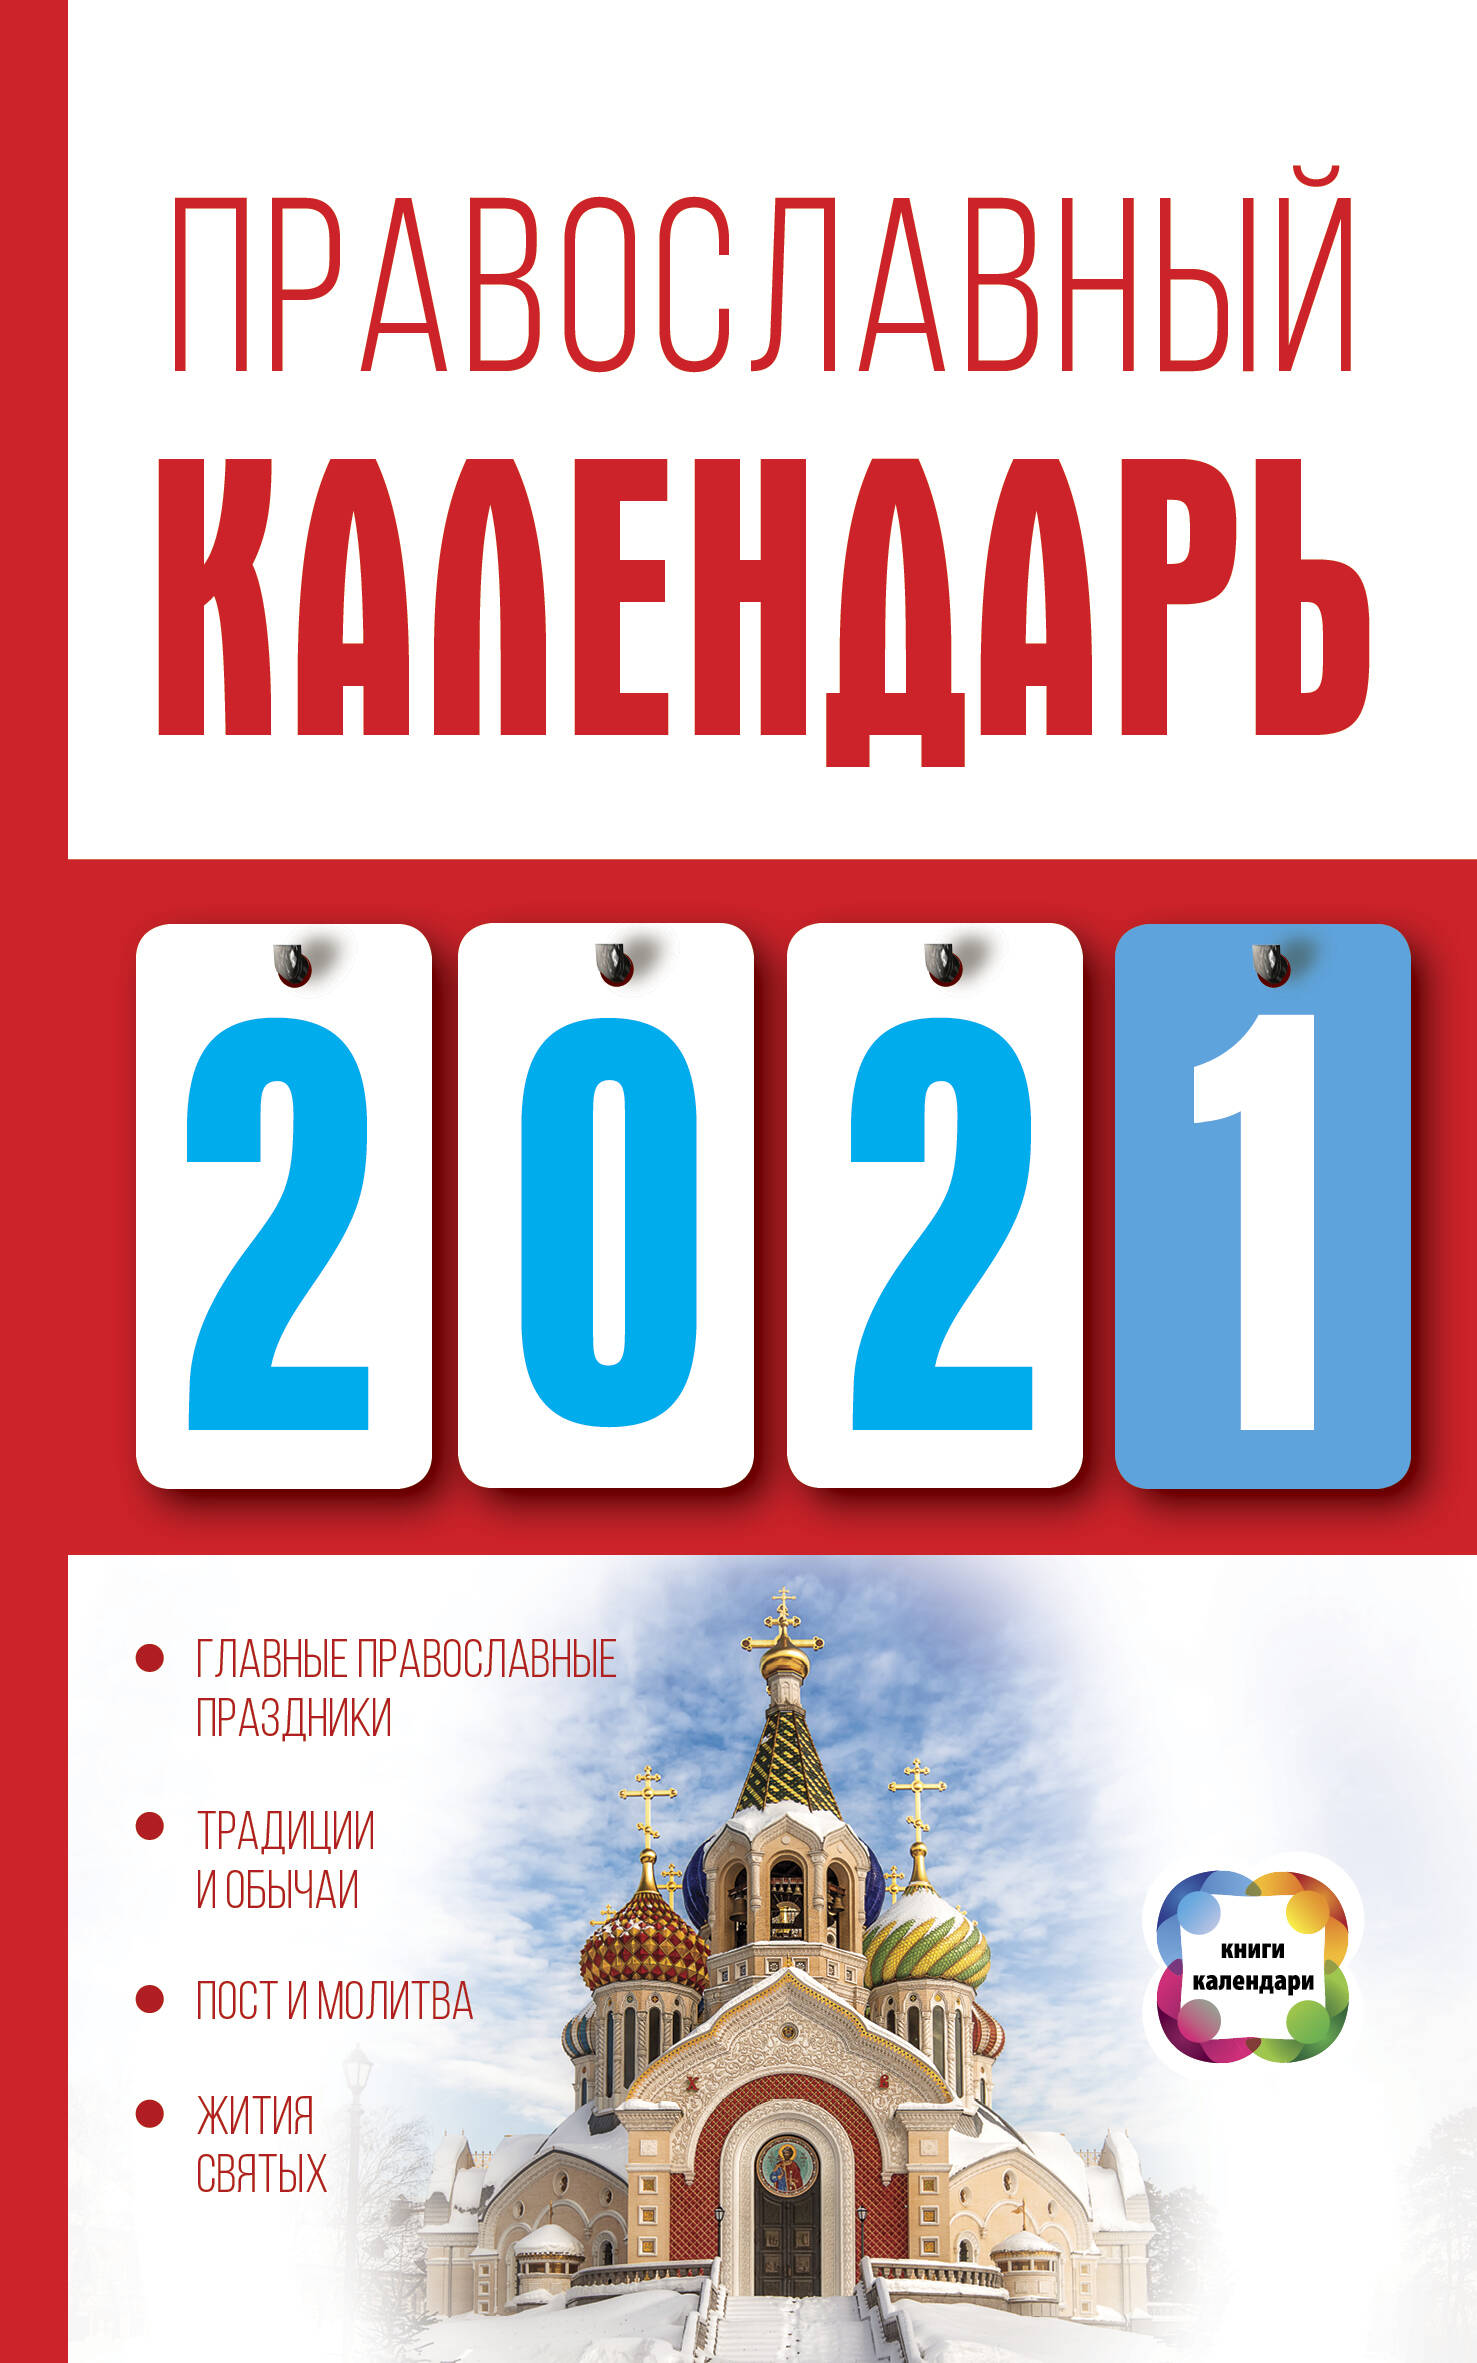 Хорсанд-Мавроматис Диана  Православный календарь на 2021 год - страница 0